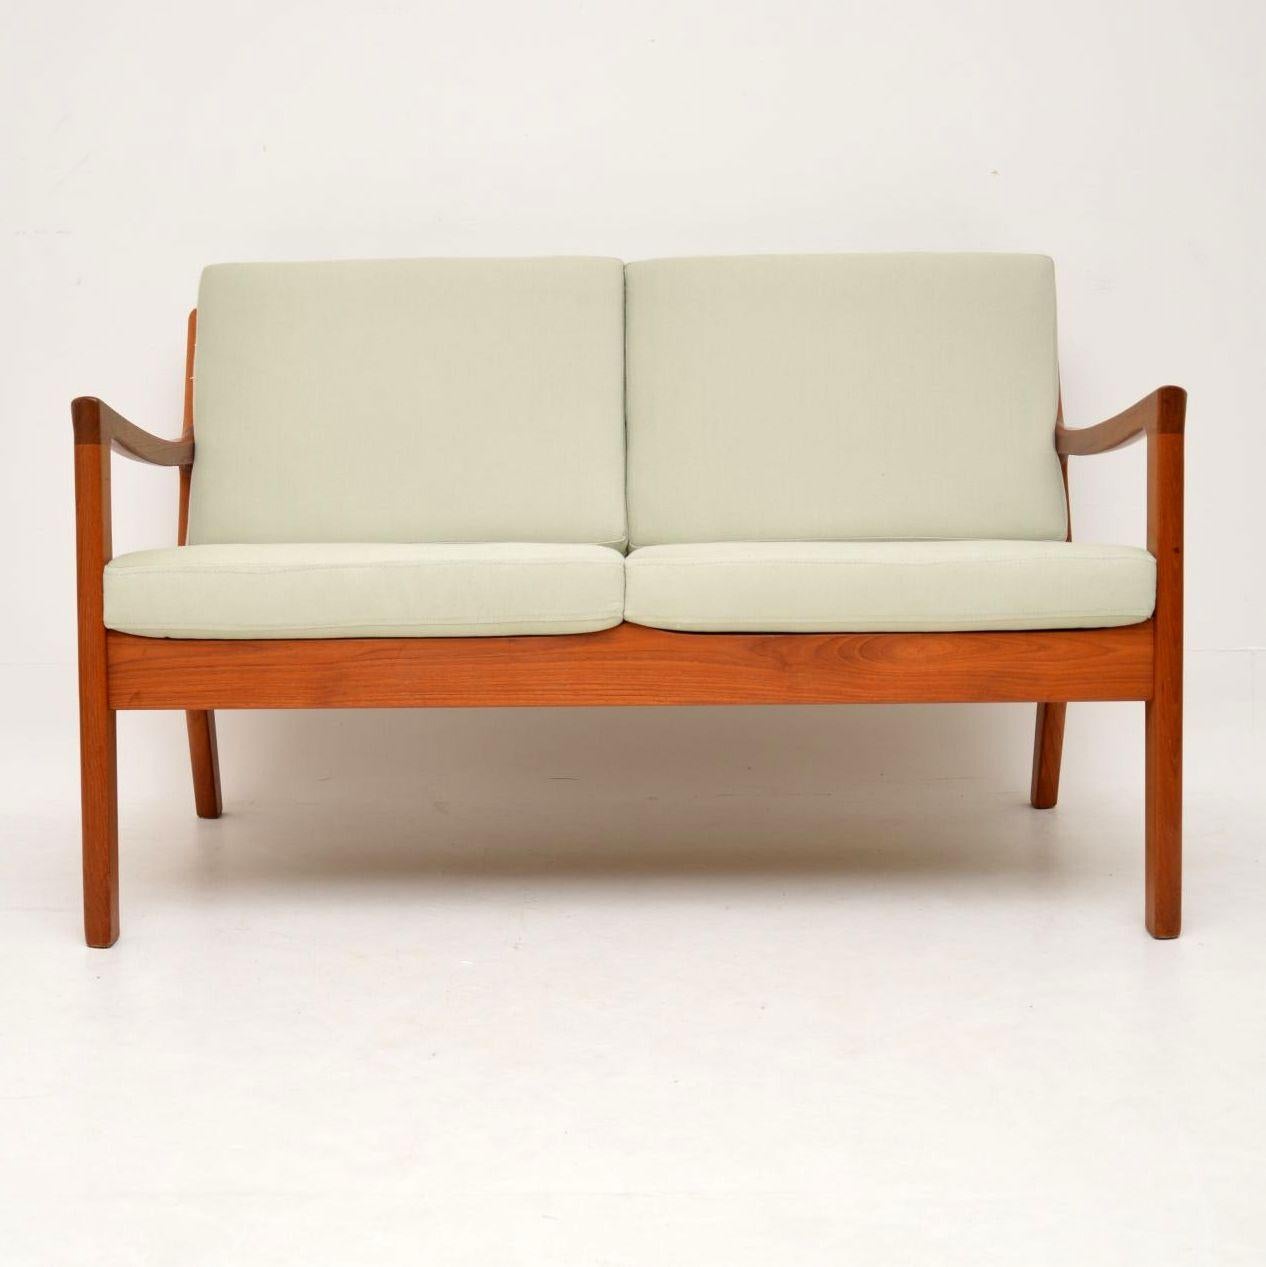 Dieses atemberaubende dänische Sofa aus massivem Teakholz trägt den Namen 